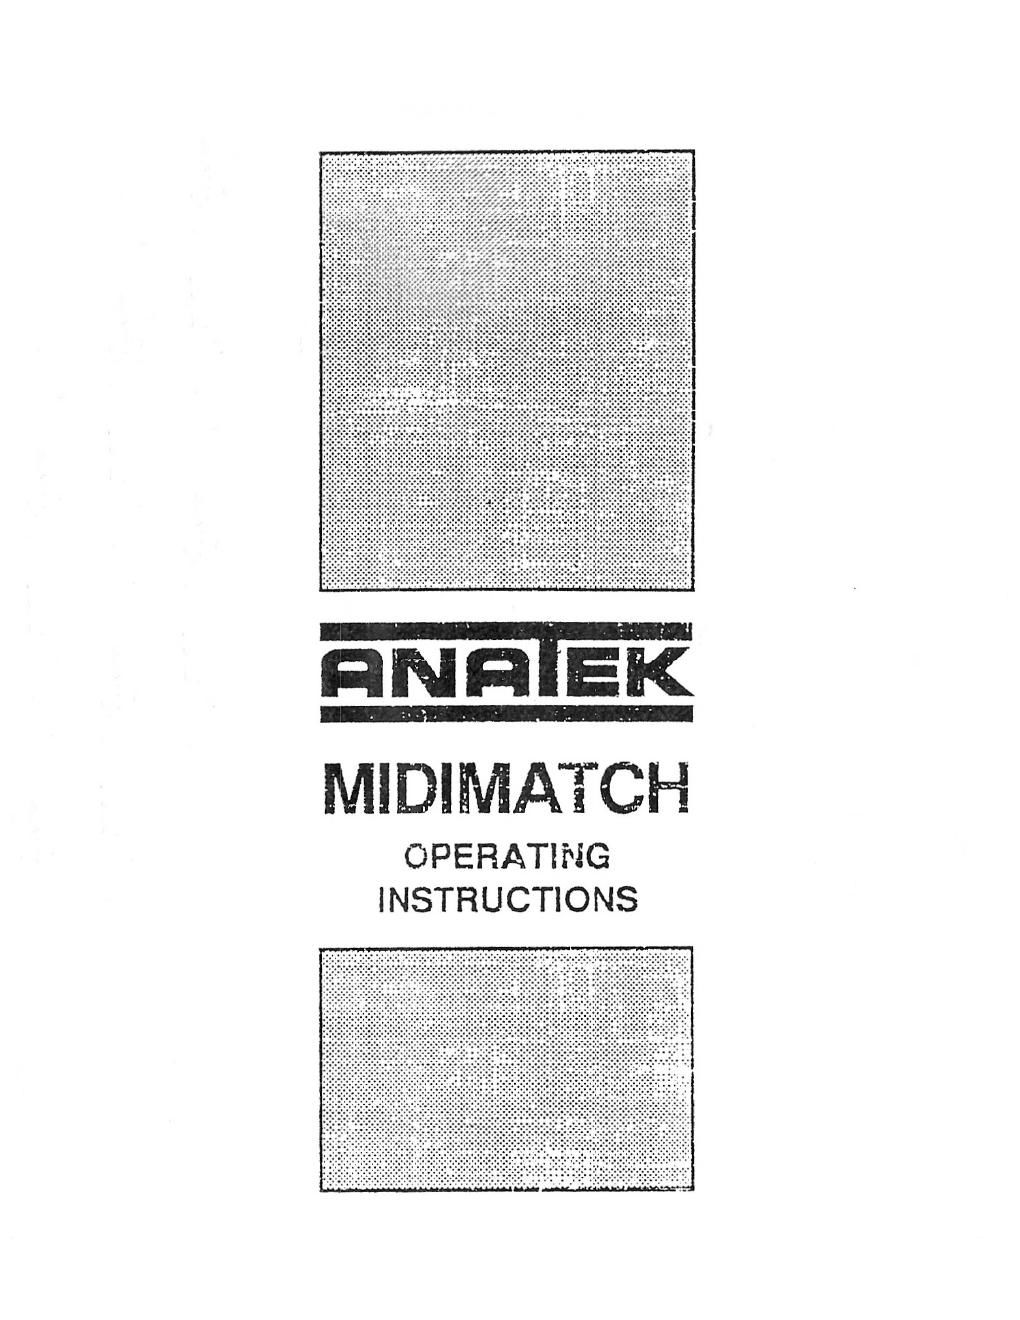 anatek midi match operating instructions